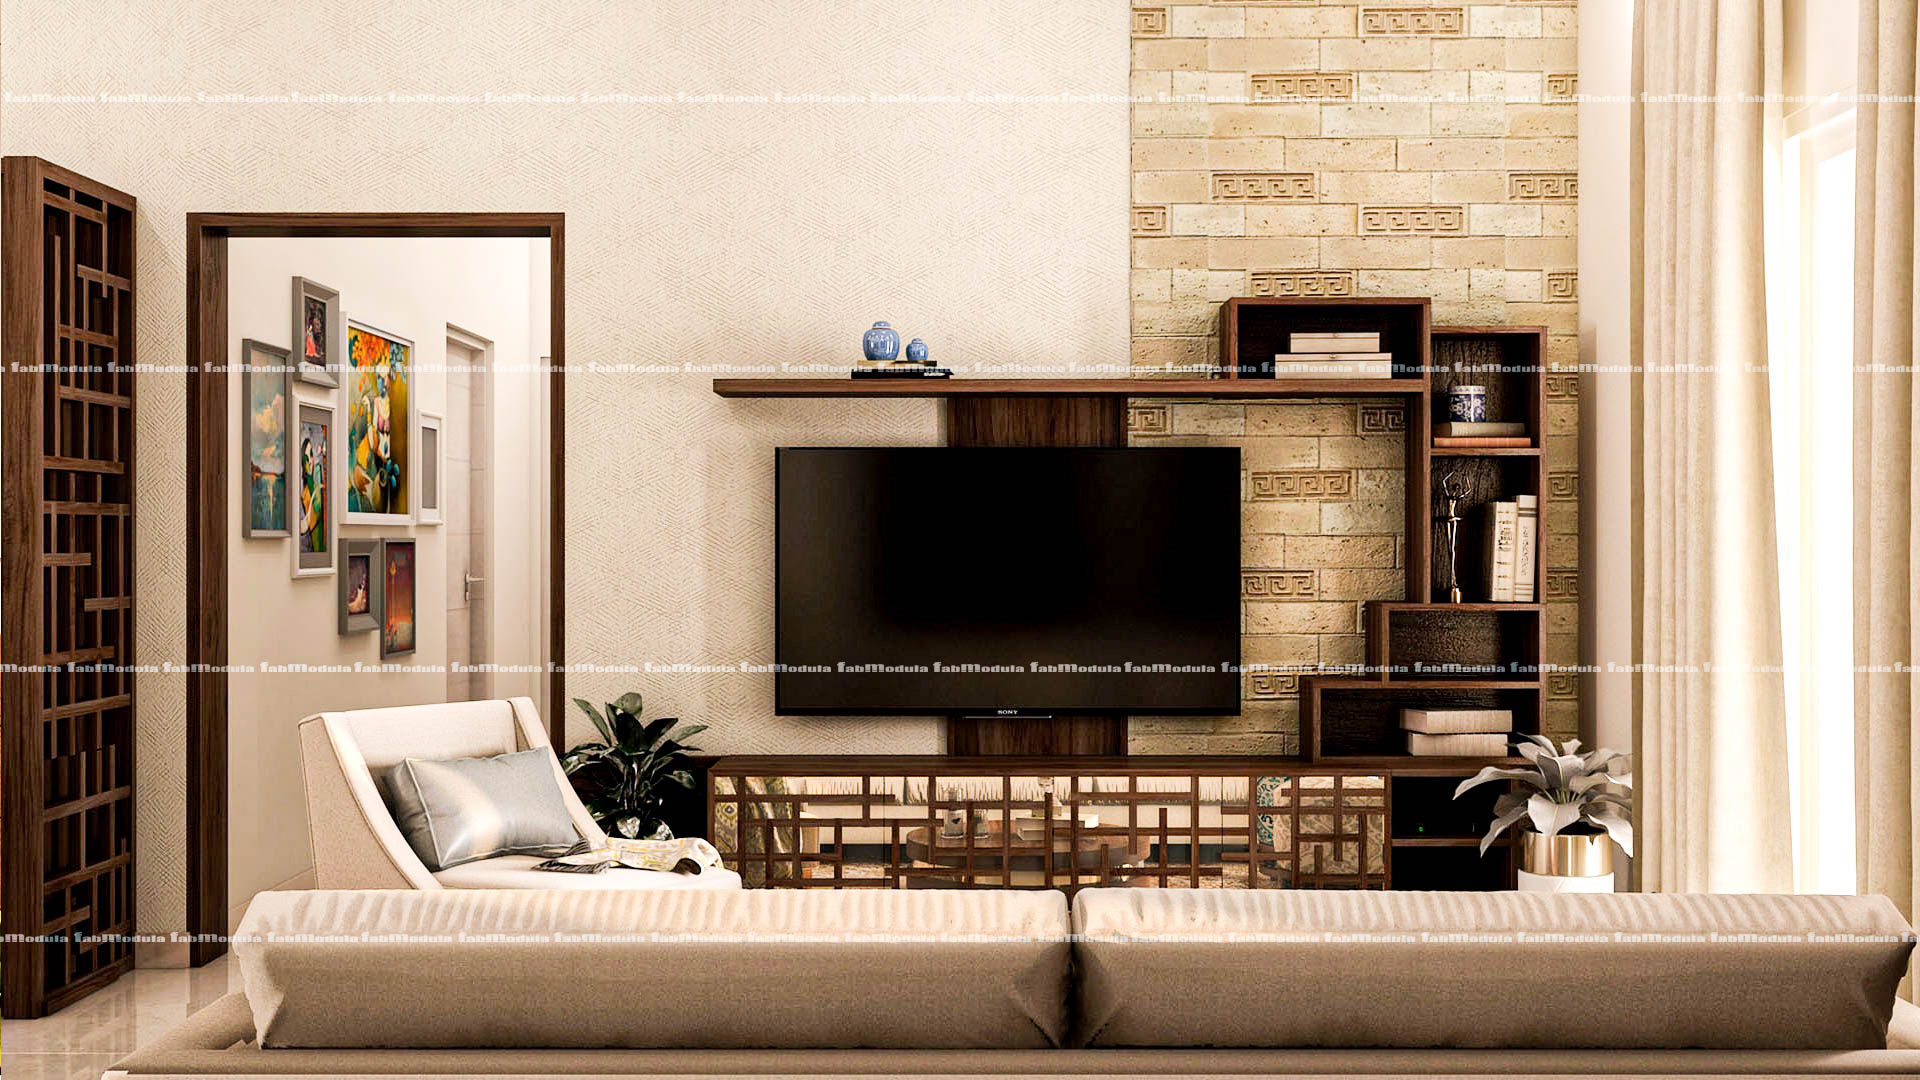 FabModula pleasant living room with tv and sofa set